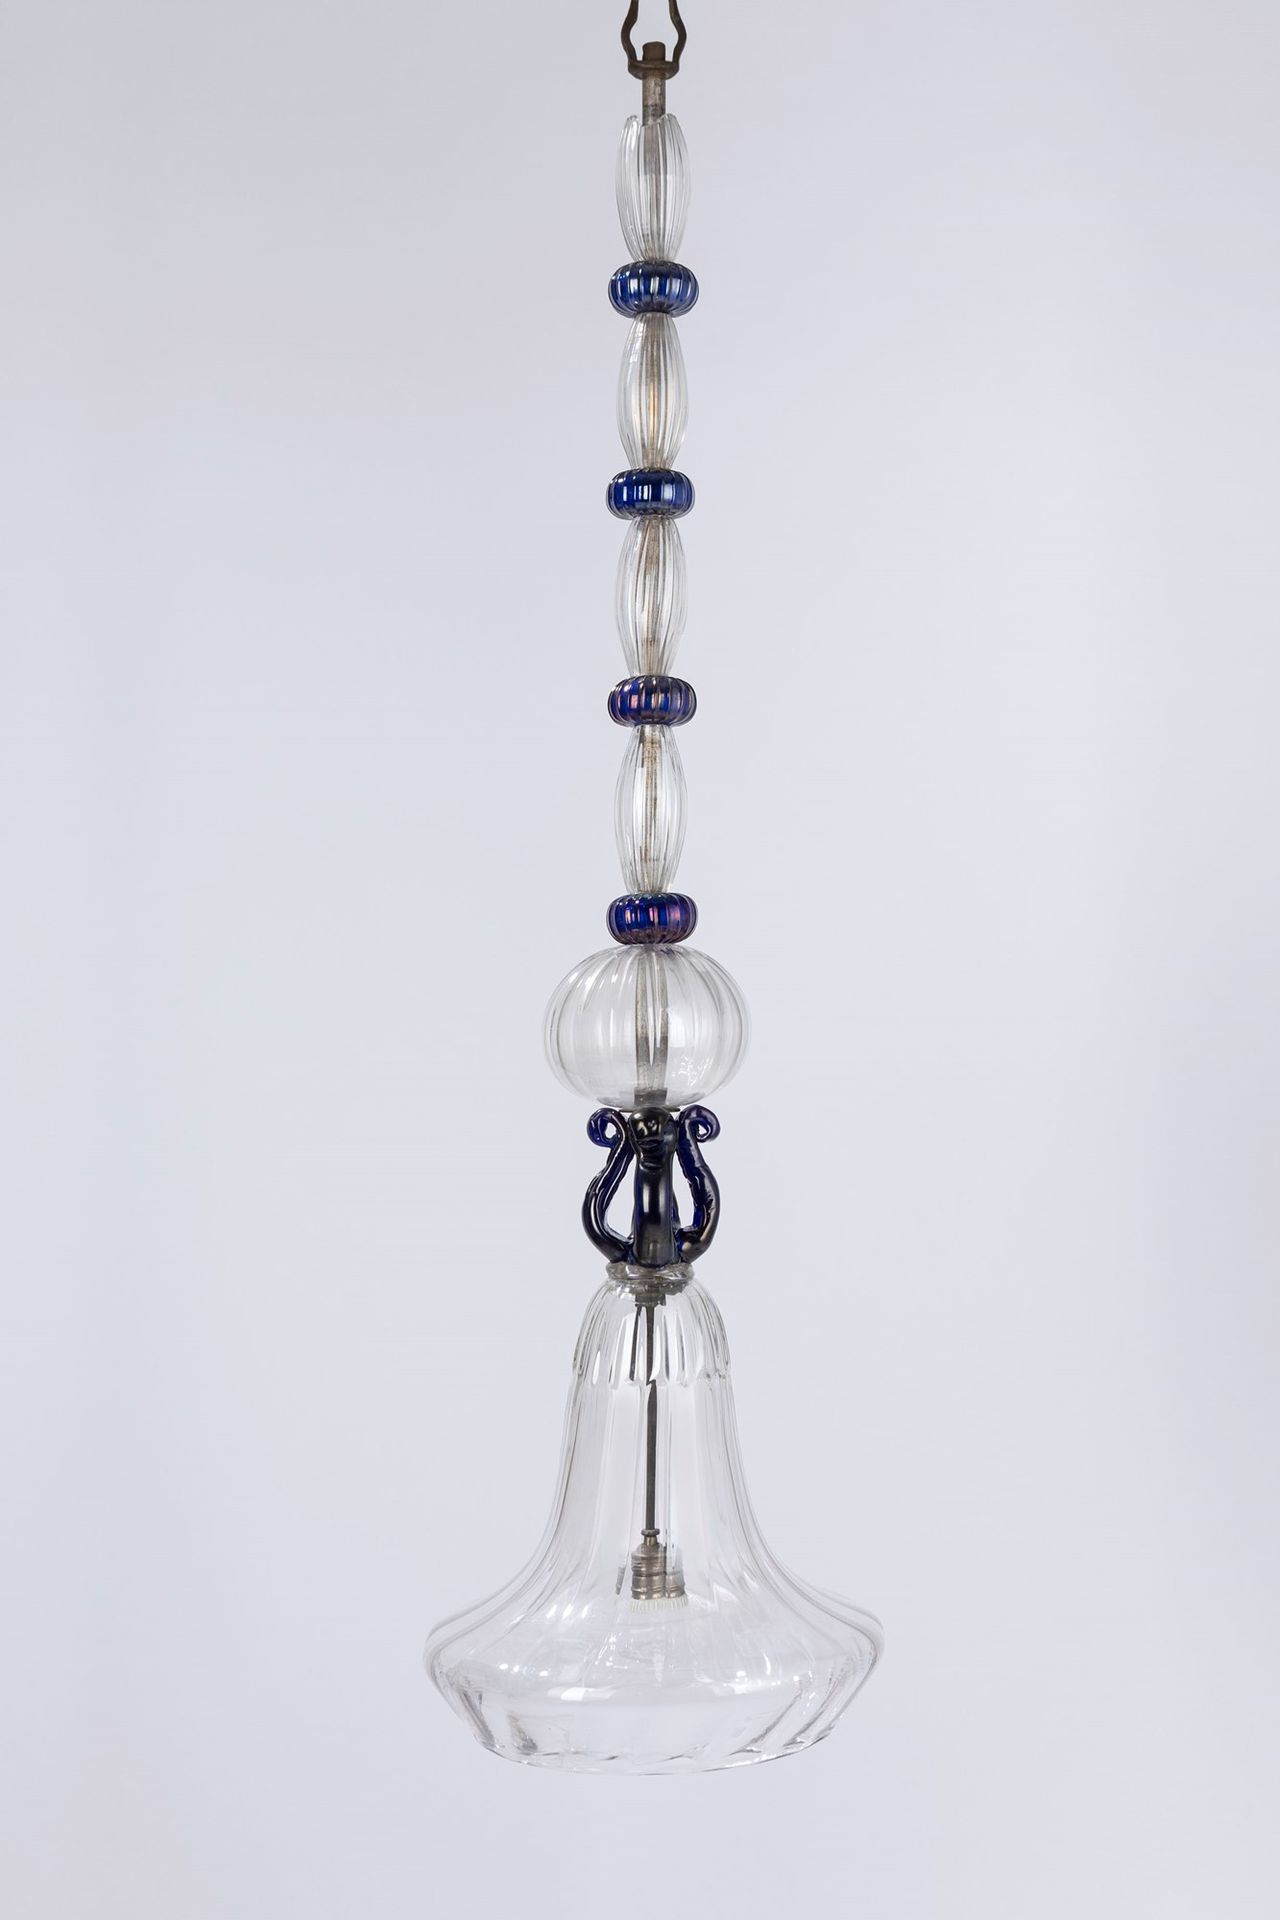 VITTORIO ZECCHIN 烛台，1920年，约

，高100厘米，约
，吹制玻璃元素。

威尼尼制造。

上部元件有缺陷。